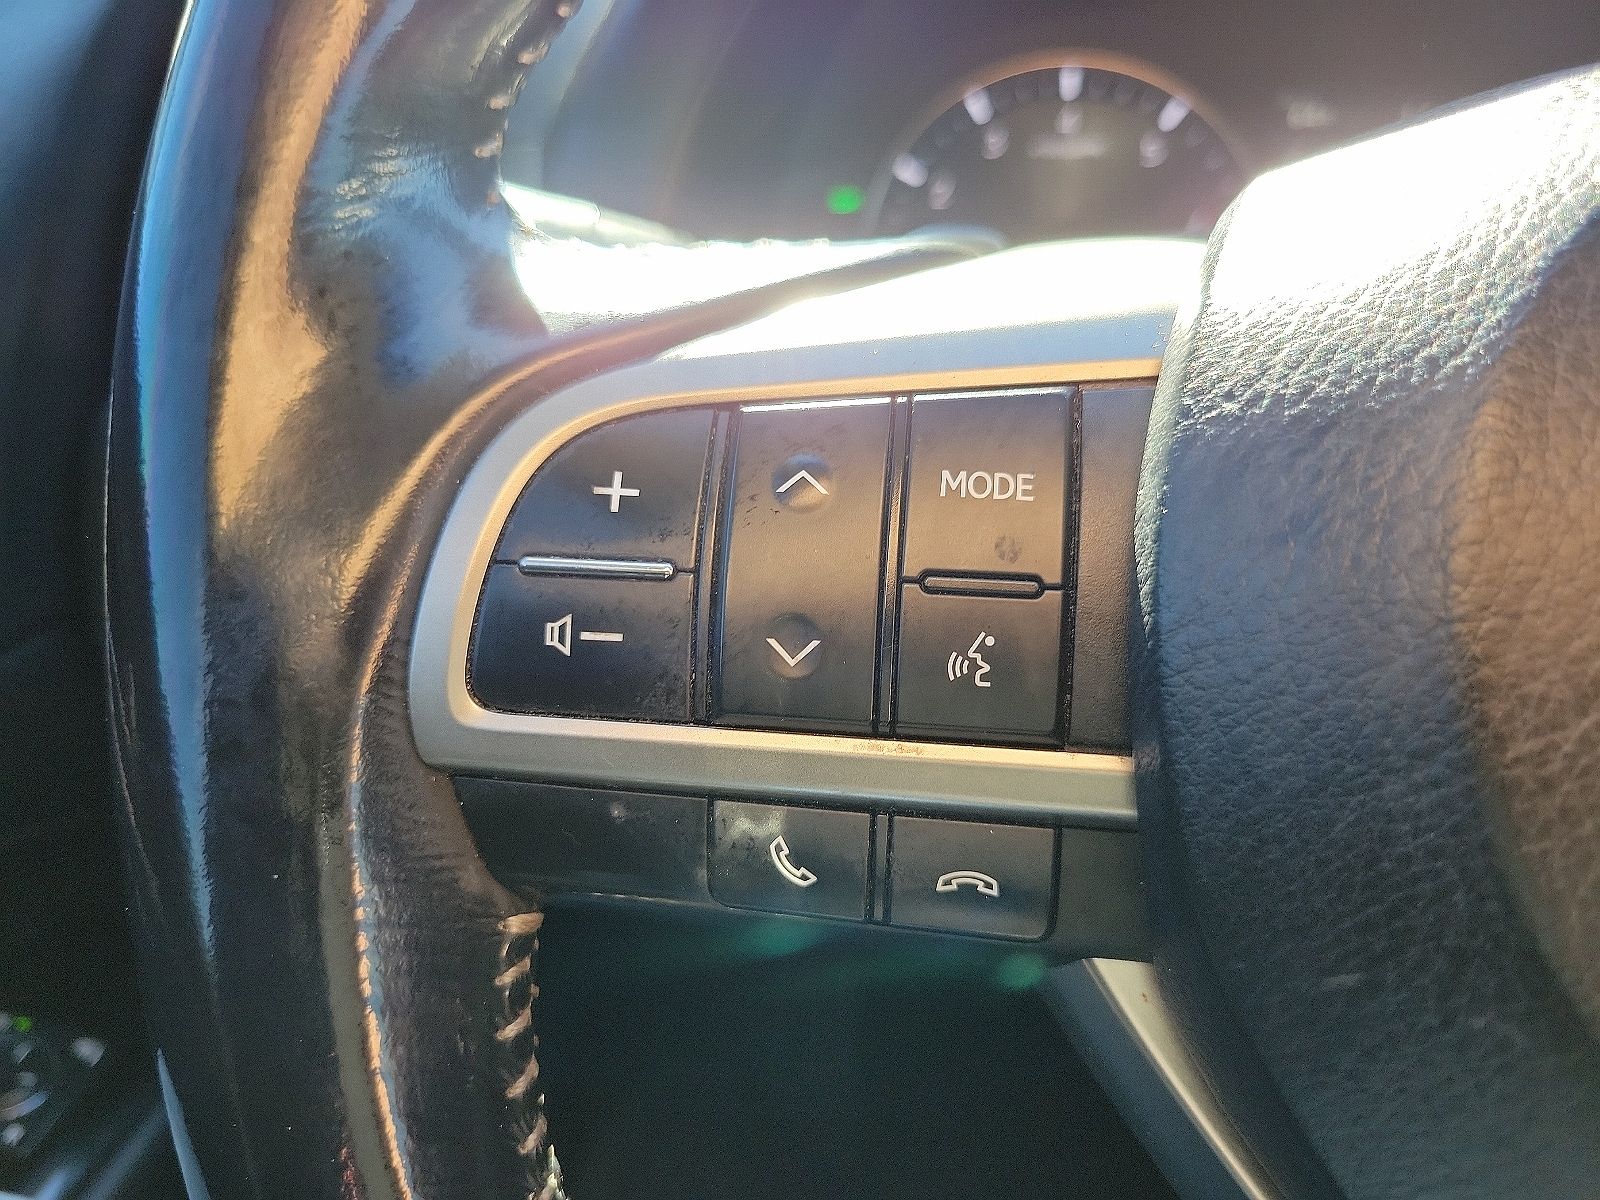 2016 Lexus GS 200t image 23